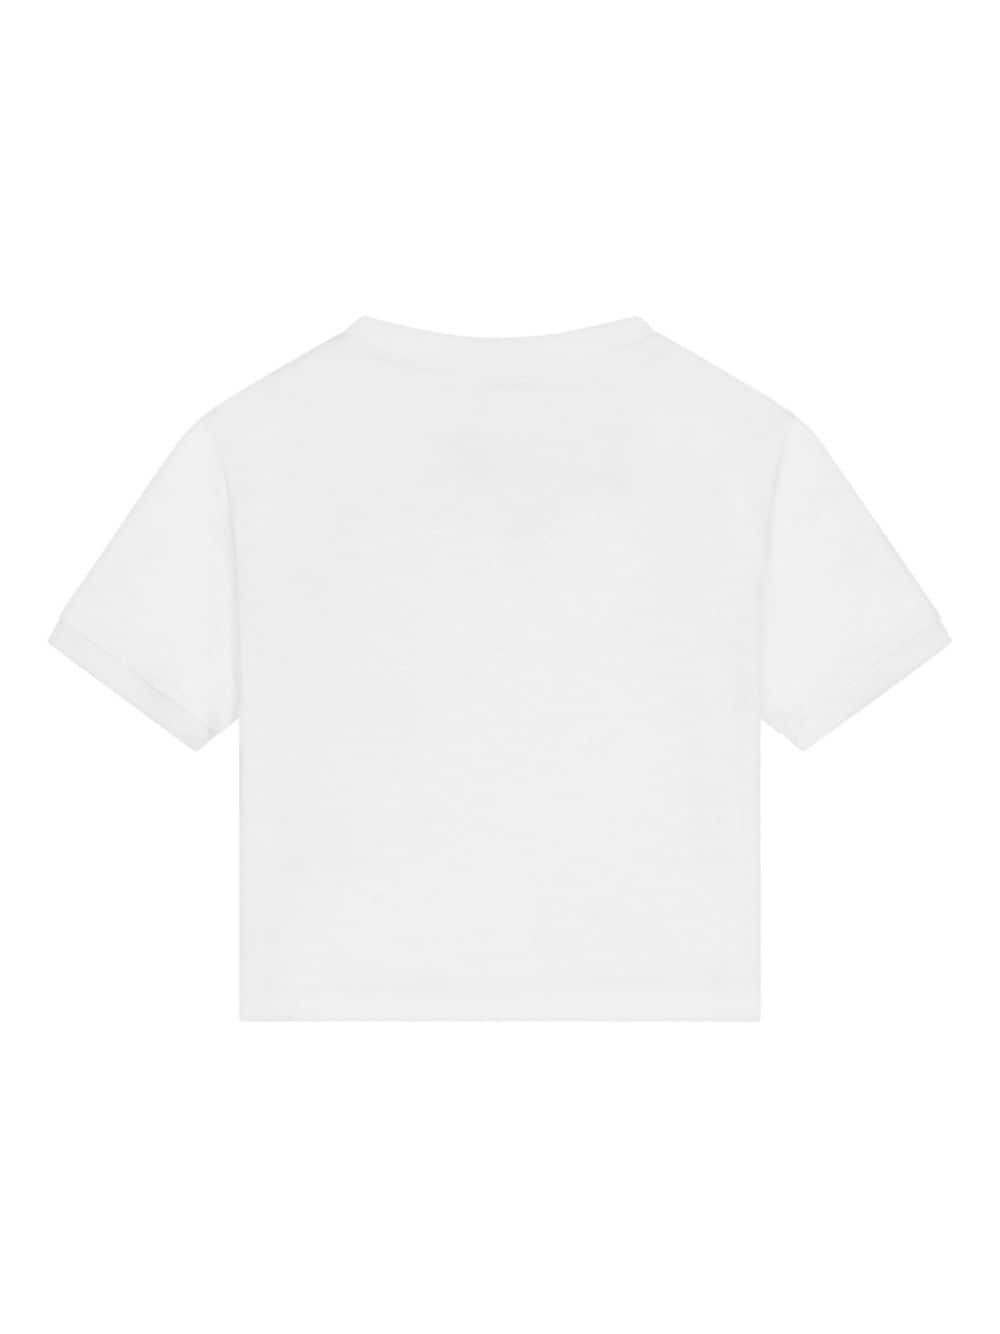 T-shirt fille blanc avec logo rouge